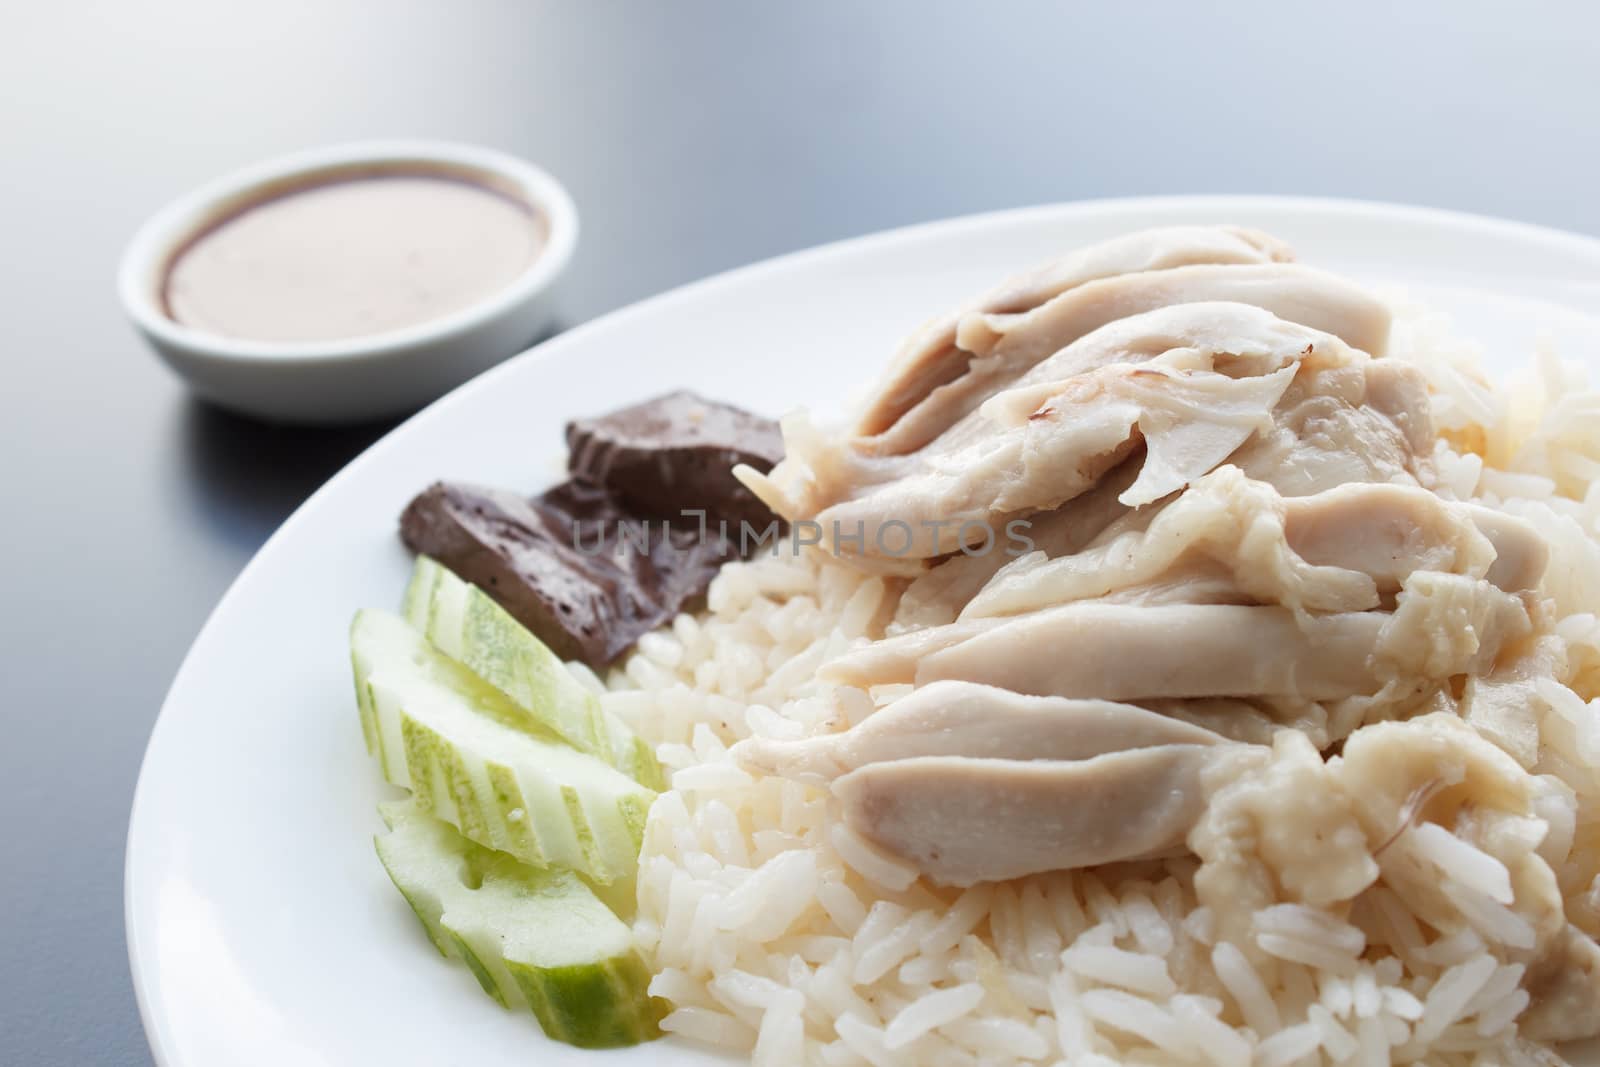 Hainanese chicken rice and sauces,khao mun kai